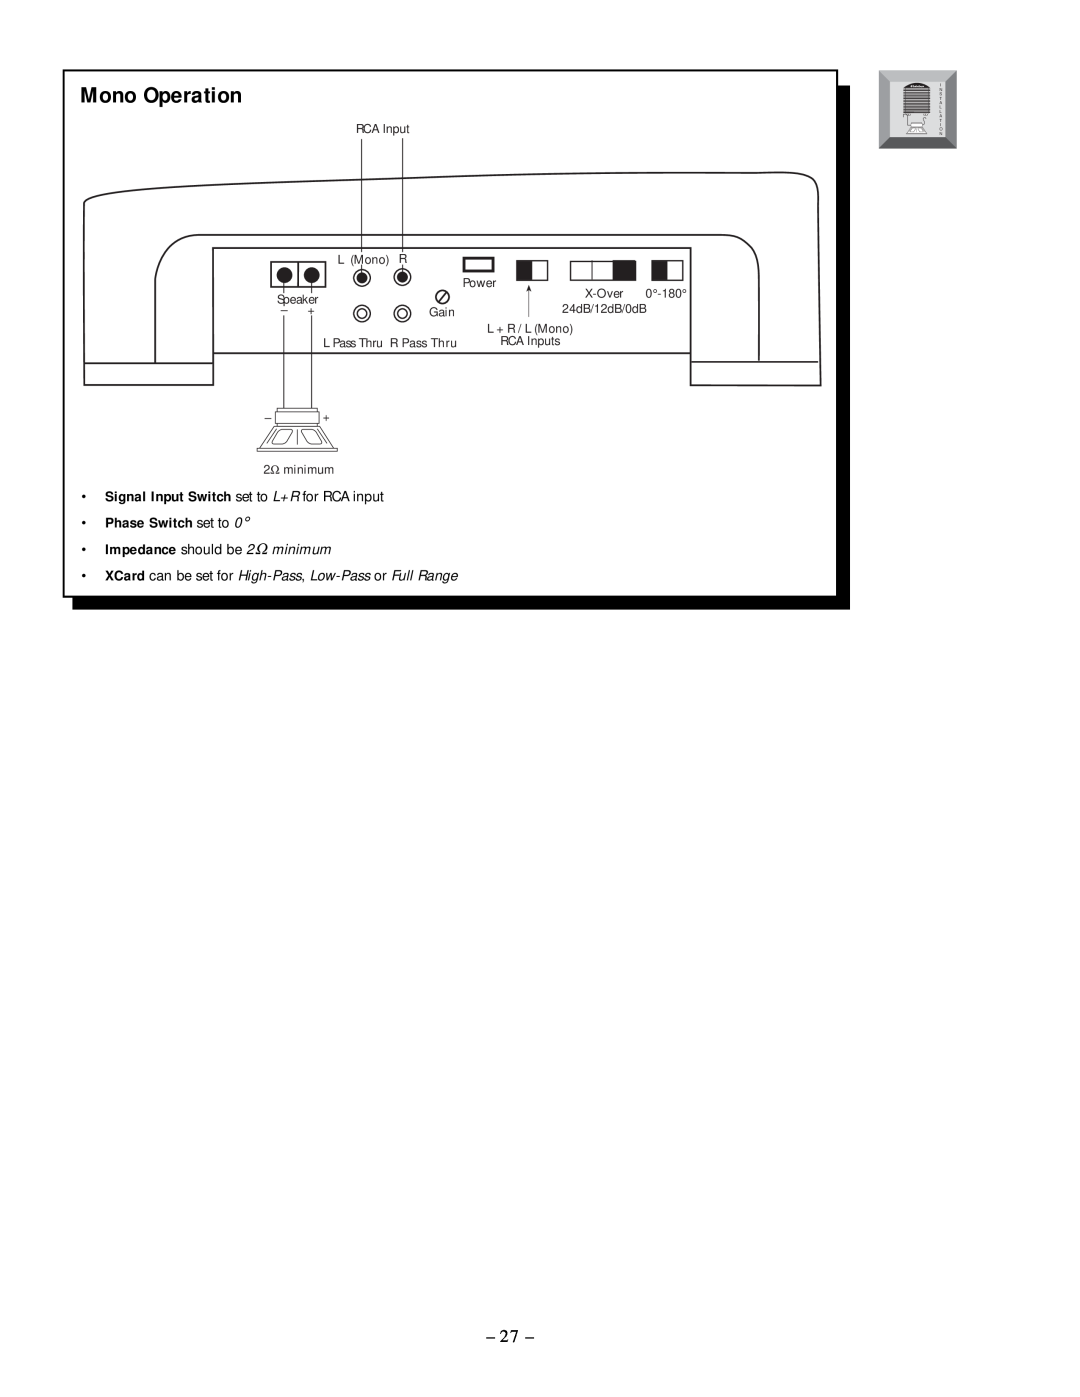 Rockford Fosgate 250.2 manual Mono Operation, Phase Switch set to 